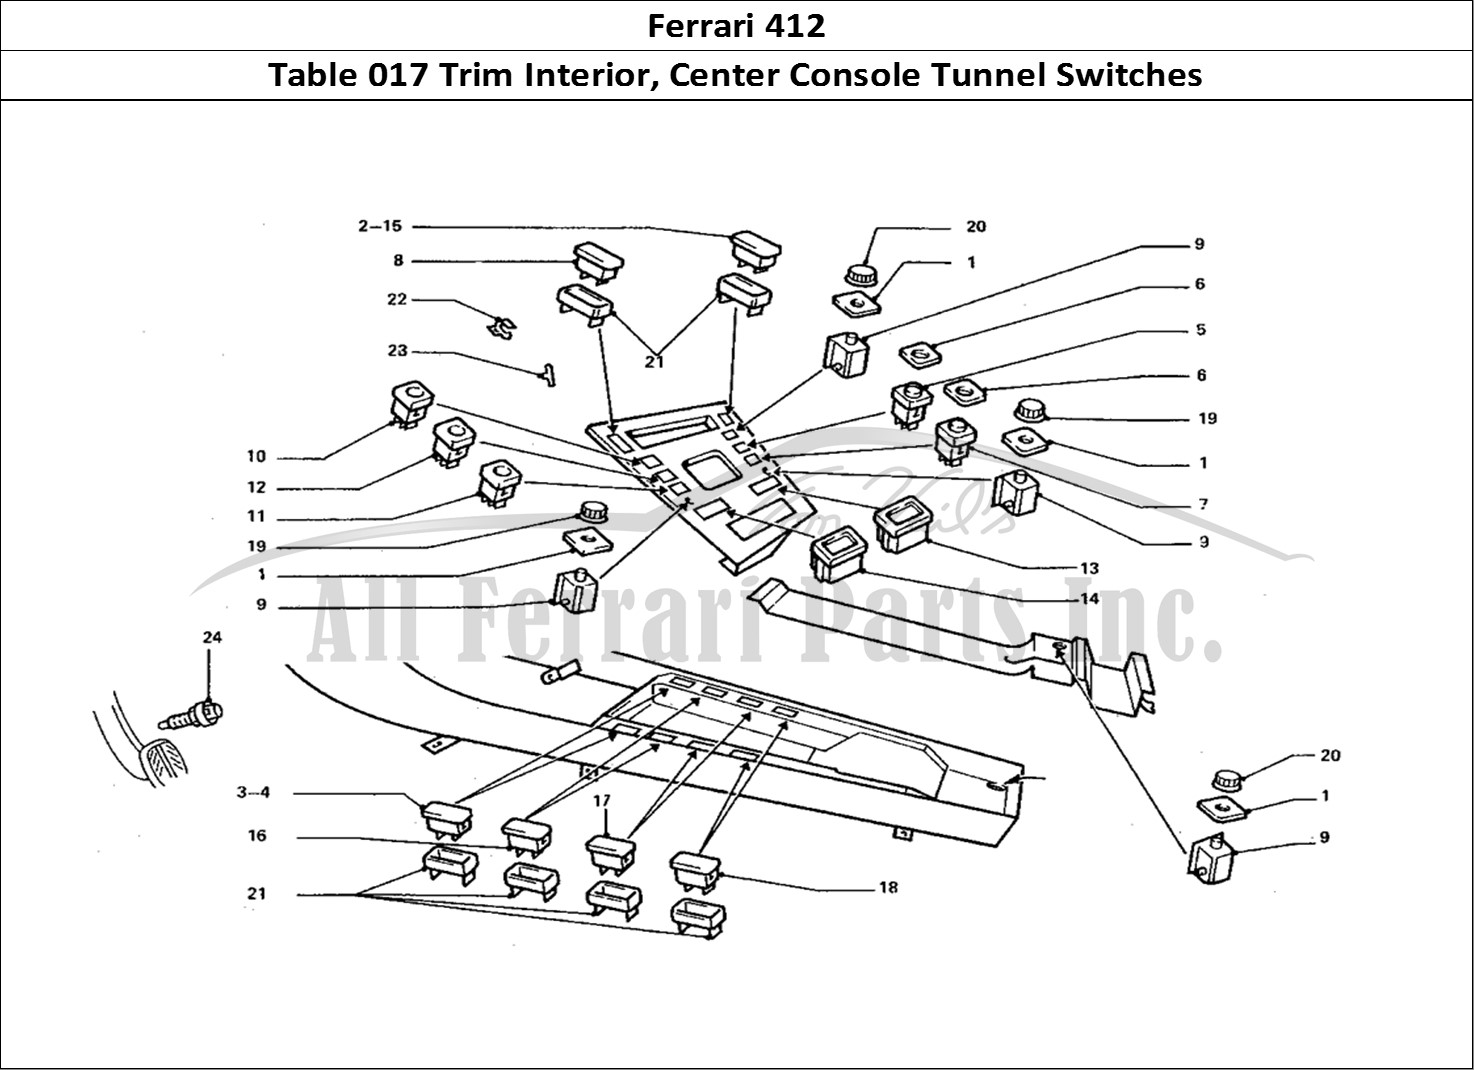 Ferrari Parts Ferrari 412 (Coachwork) Page 017 Centre Consloe Switches